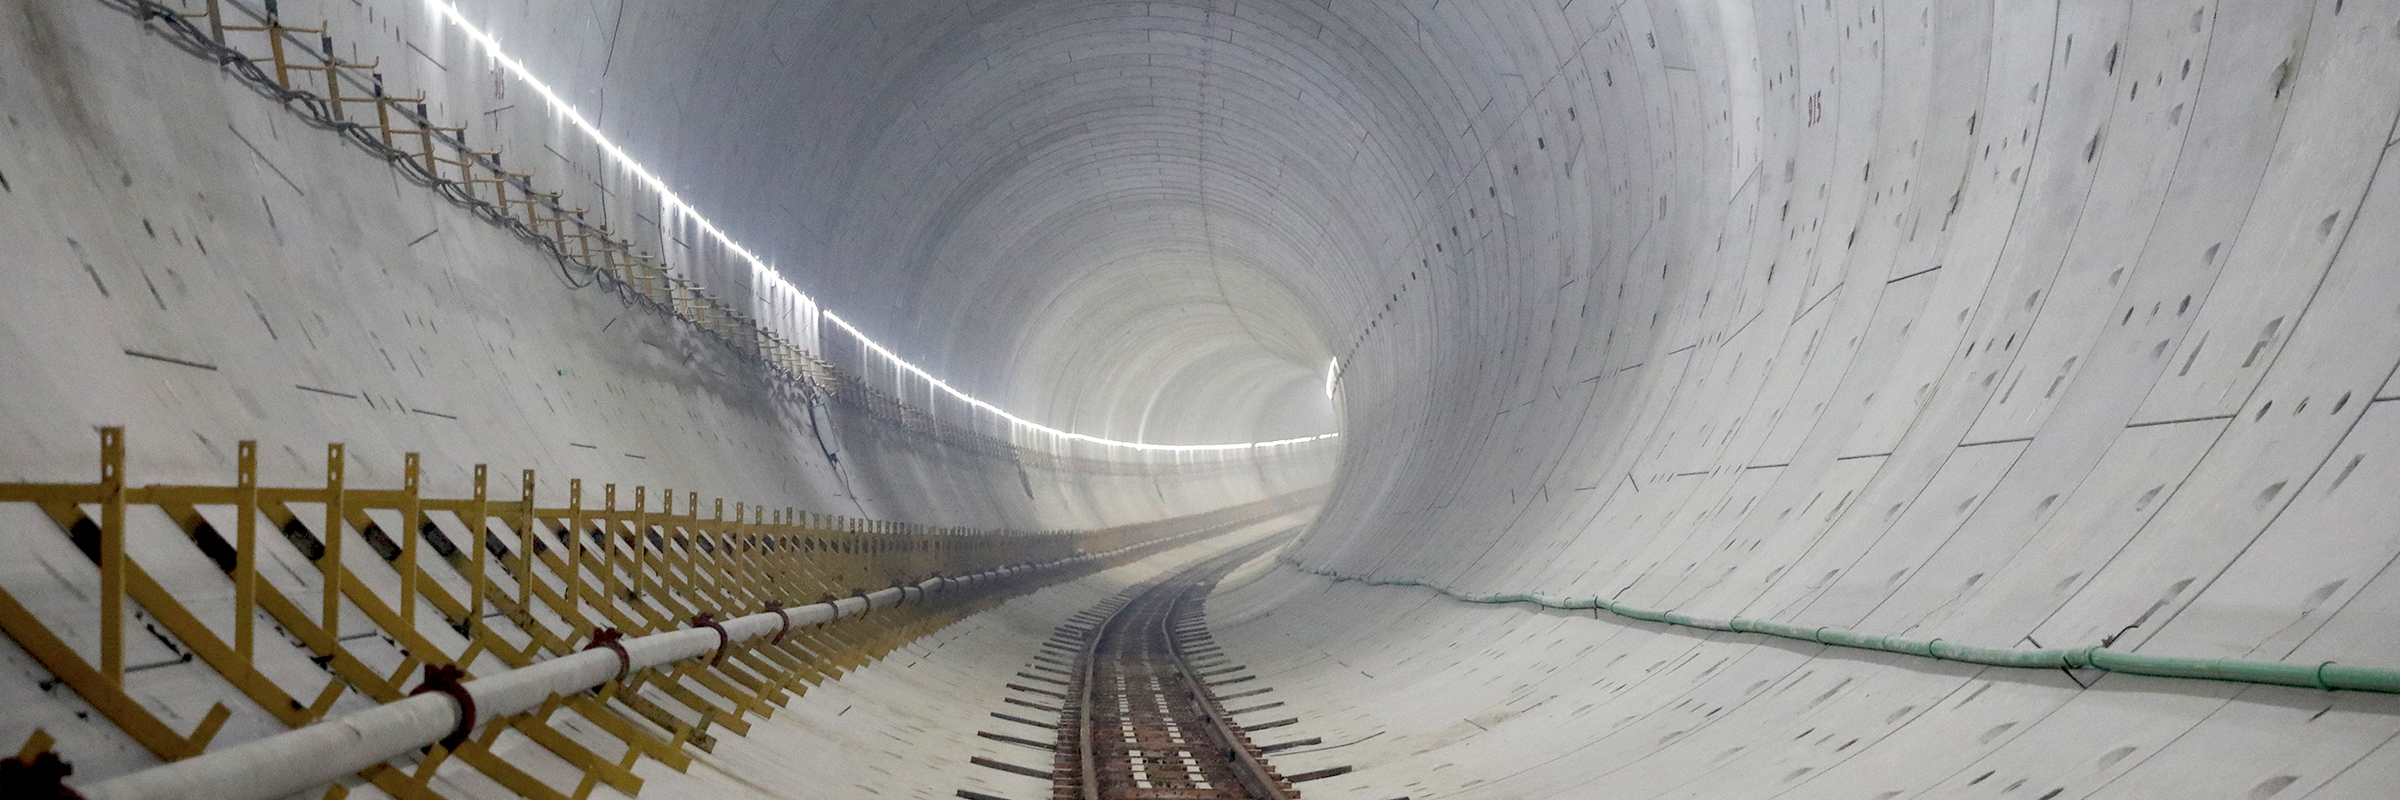 Bangabandhu Sheikh Mujibur Rahman Tunnel, Bangladesh 